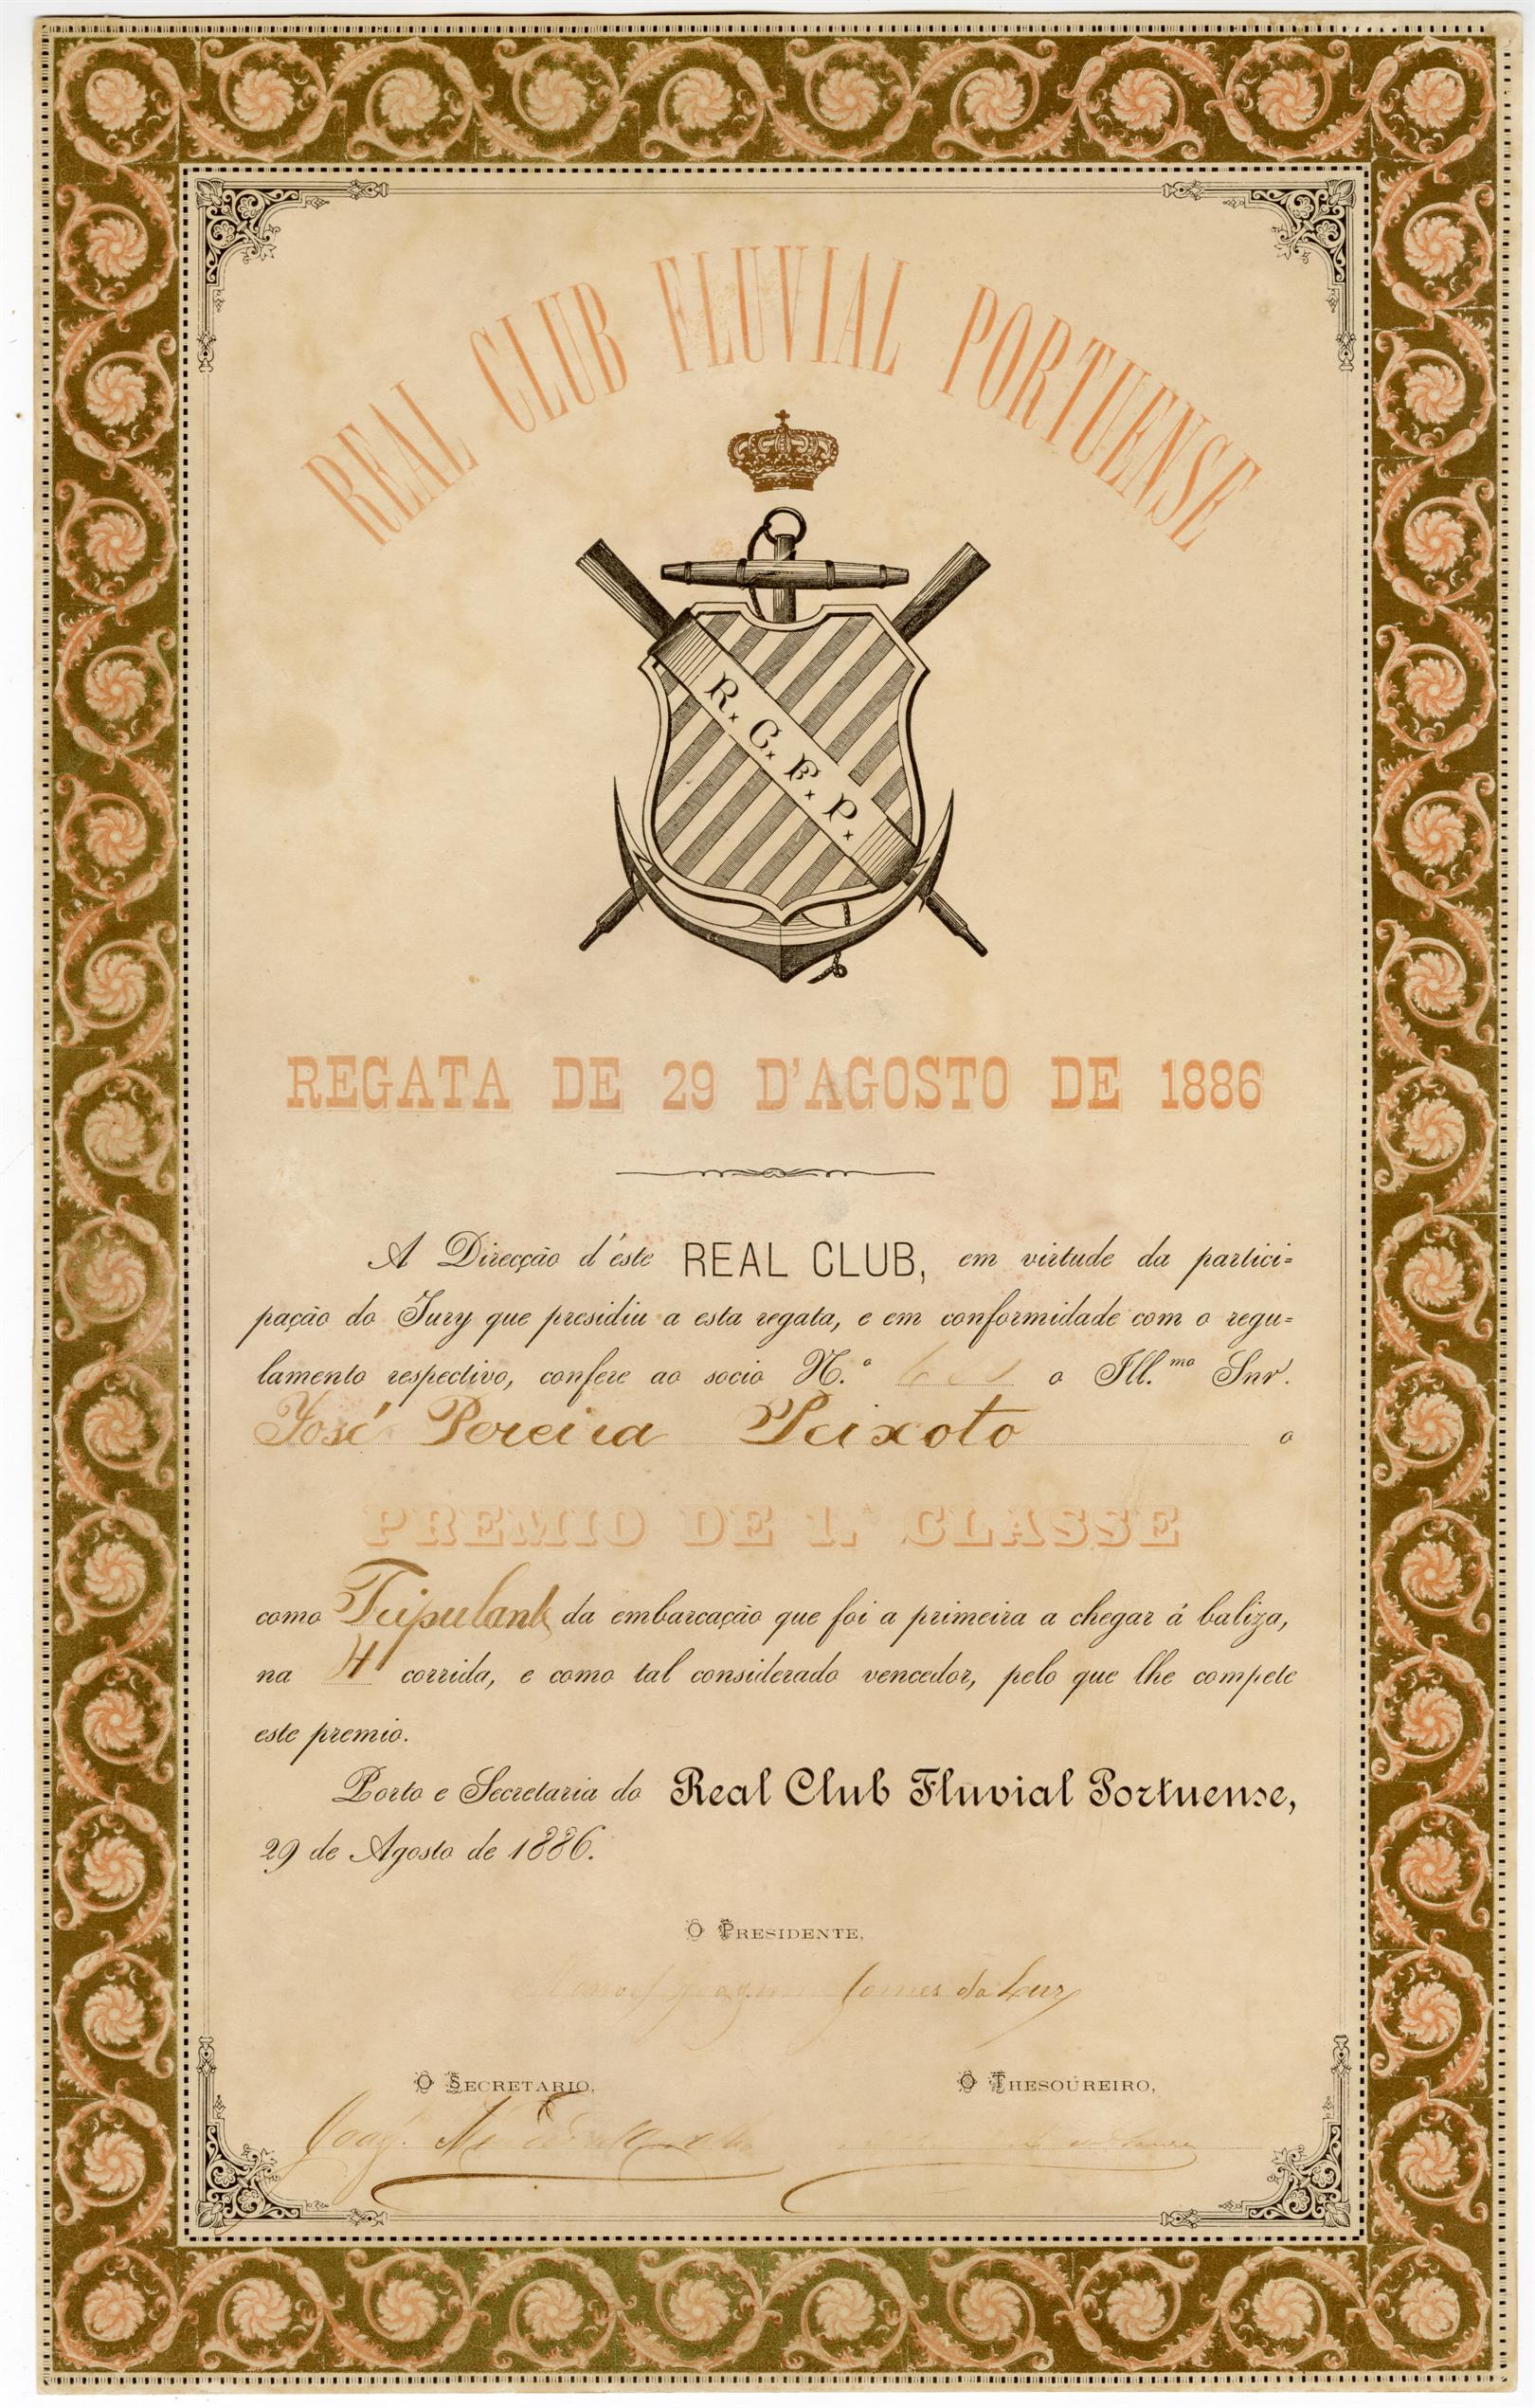 Real Clube Fluvial Portuense : regata de 29 de agosto de 1886 : prémio de 1.ª classe